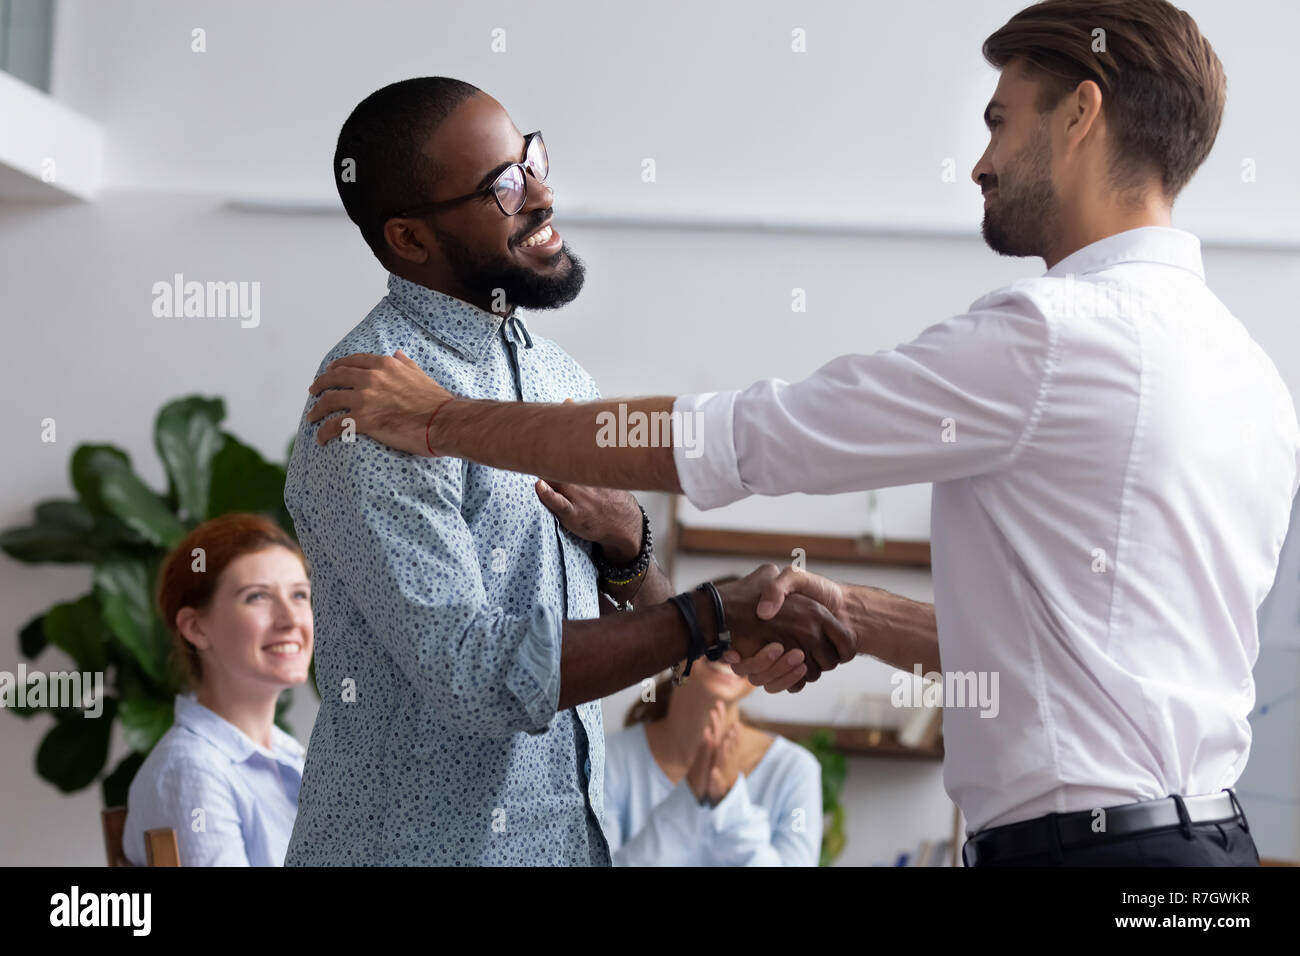 Company boss congratulating handshaking with successful employee Stock Photo